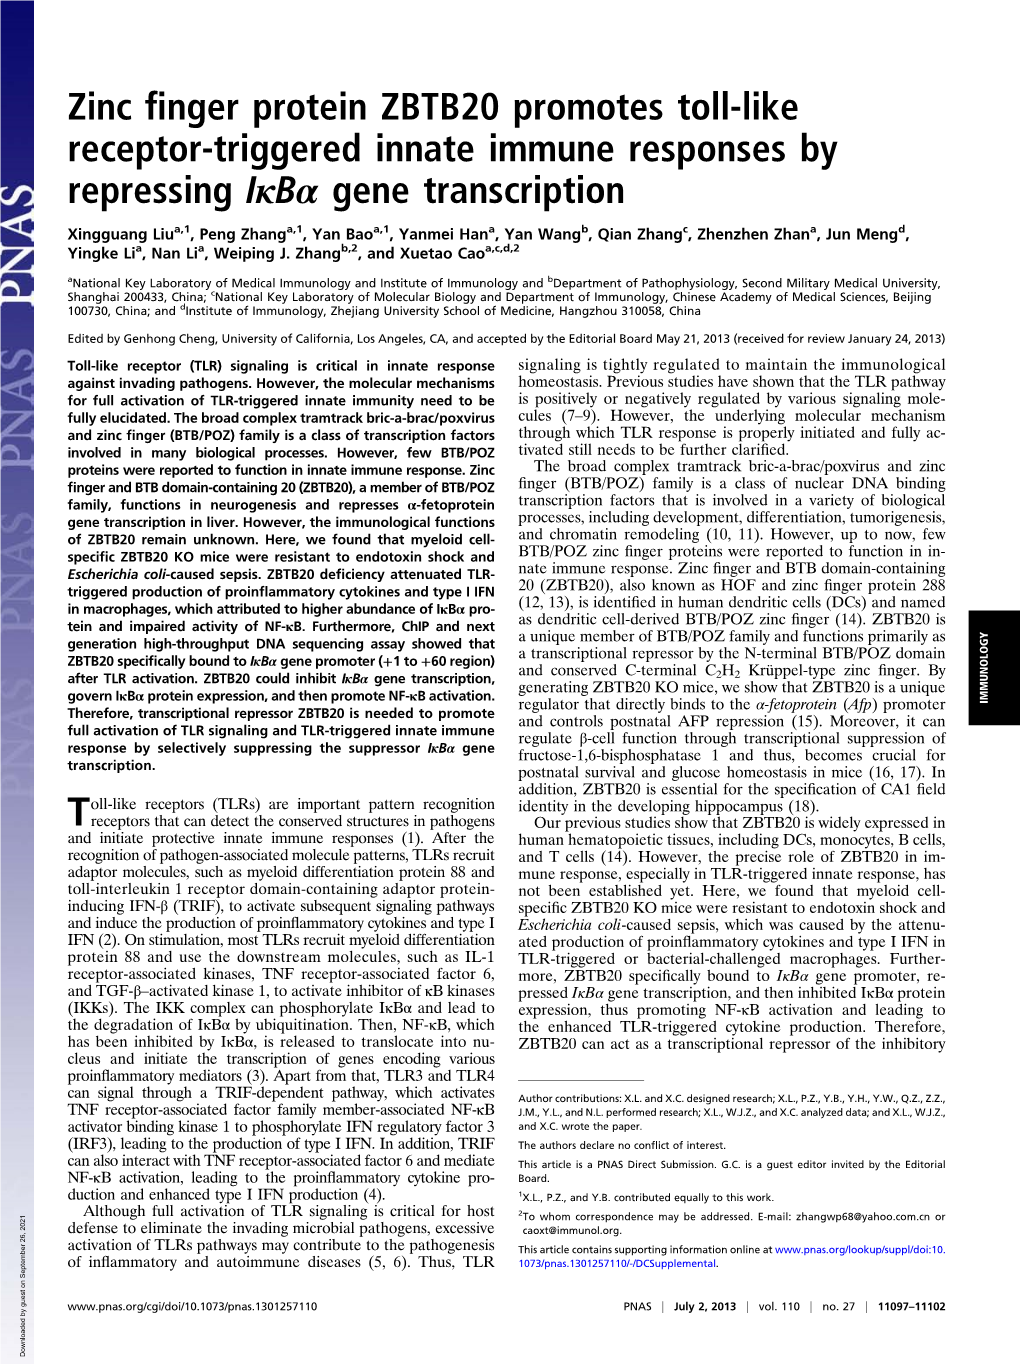 Zinc Finger Protein ZBTB20 Promotes Toll-Like Receptor-Triggered Innate